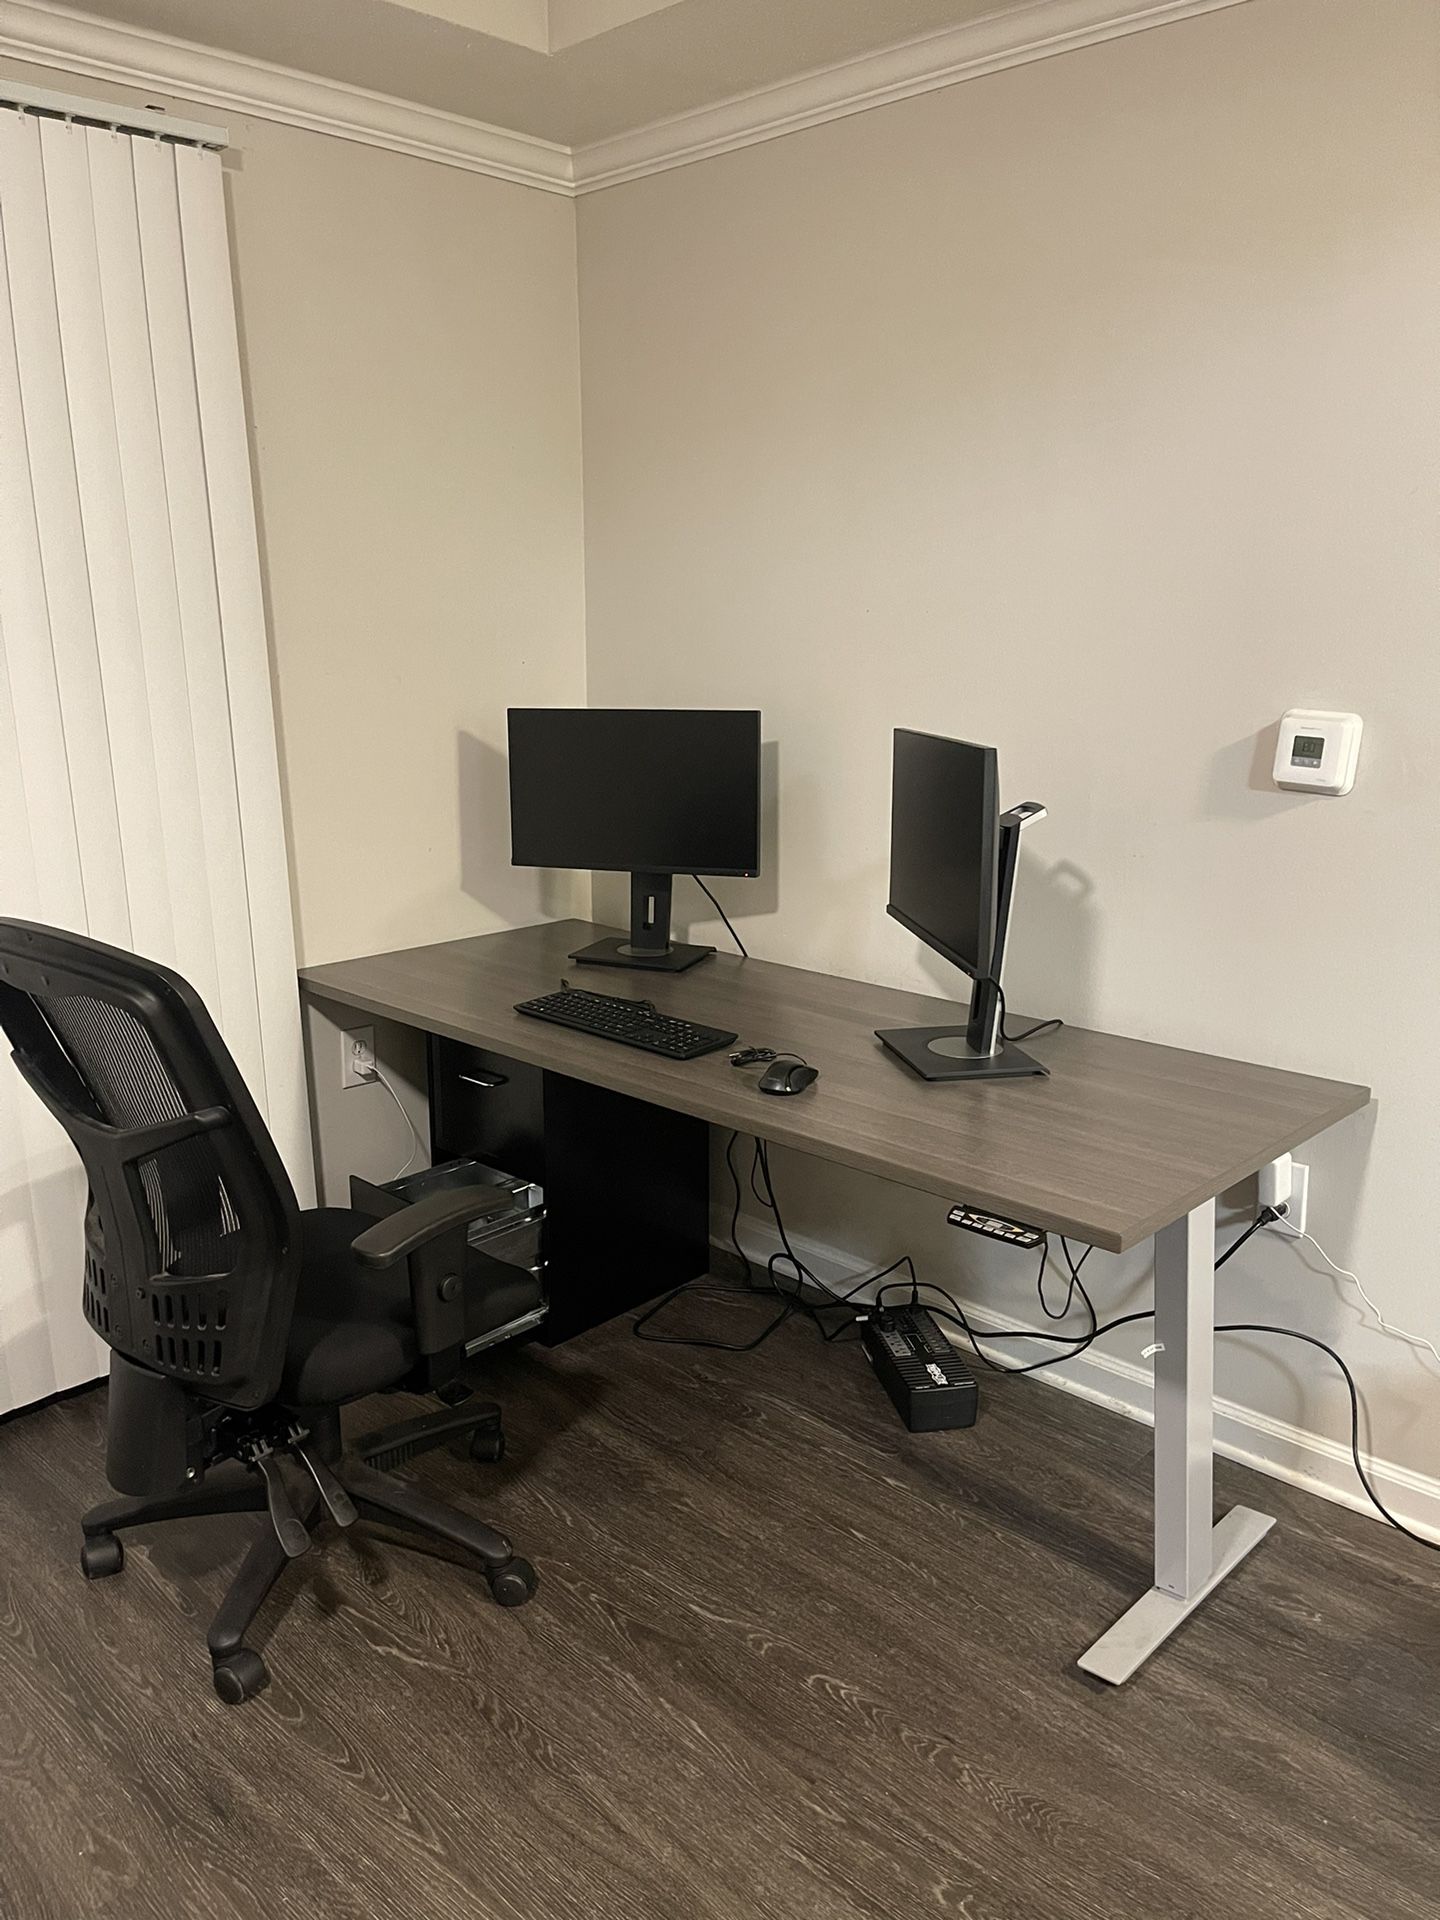 Work station with height adjustable desk